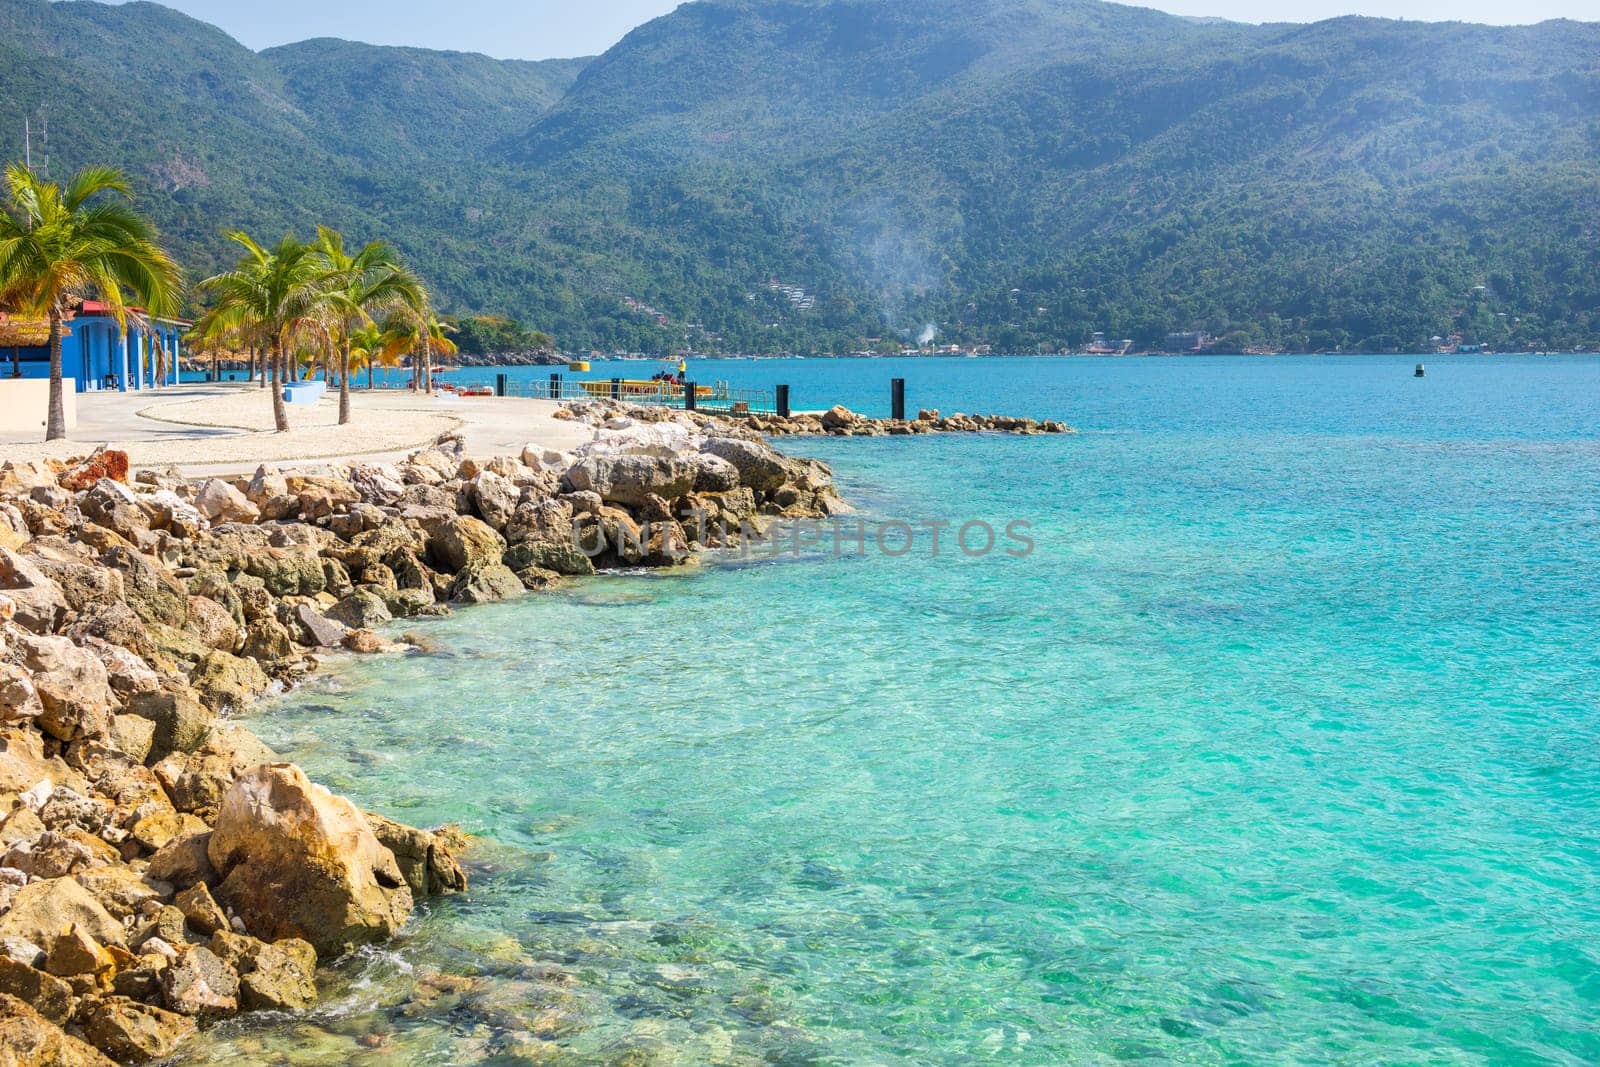 Labadee exotic tropical beach, Haiti, Caribbean Sea